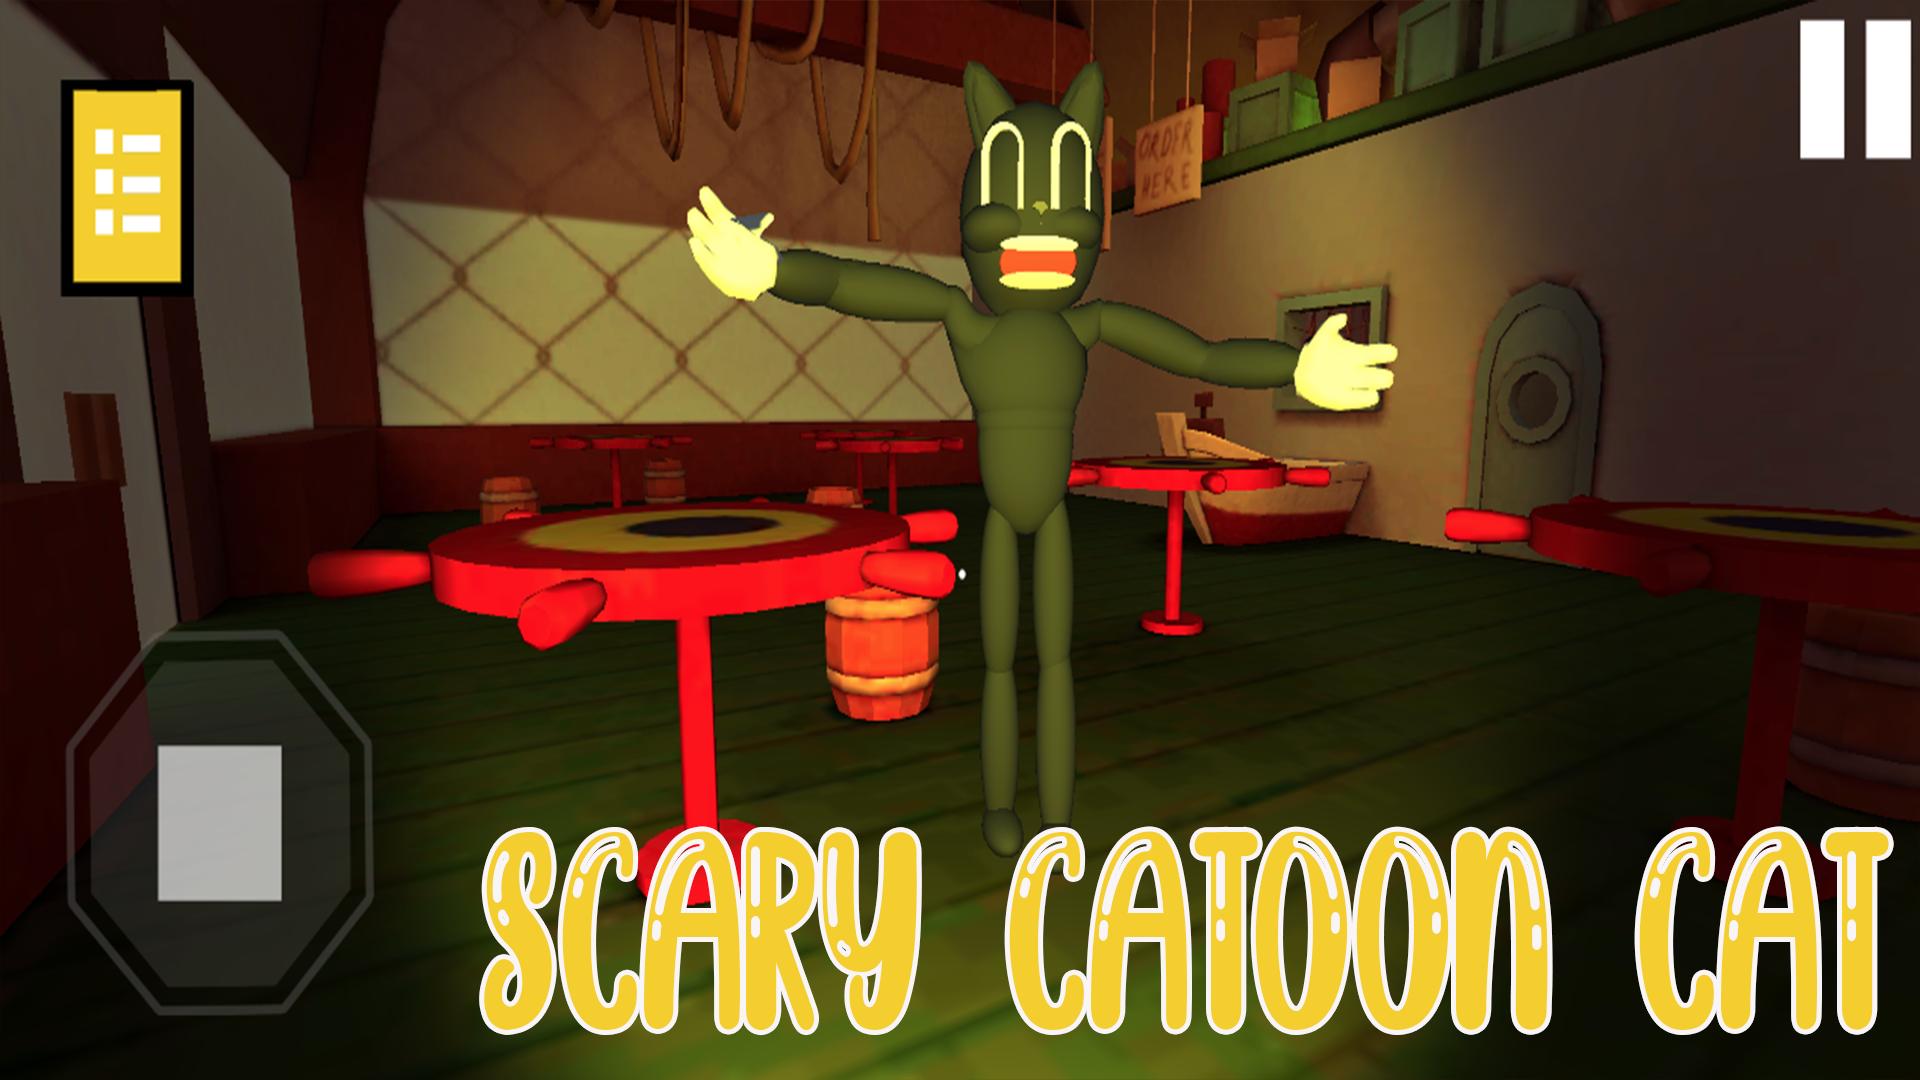 Scary Cartoon Cat Escape Game 1.0 Screenshot 4